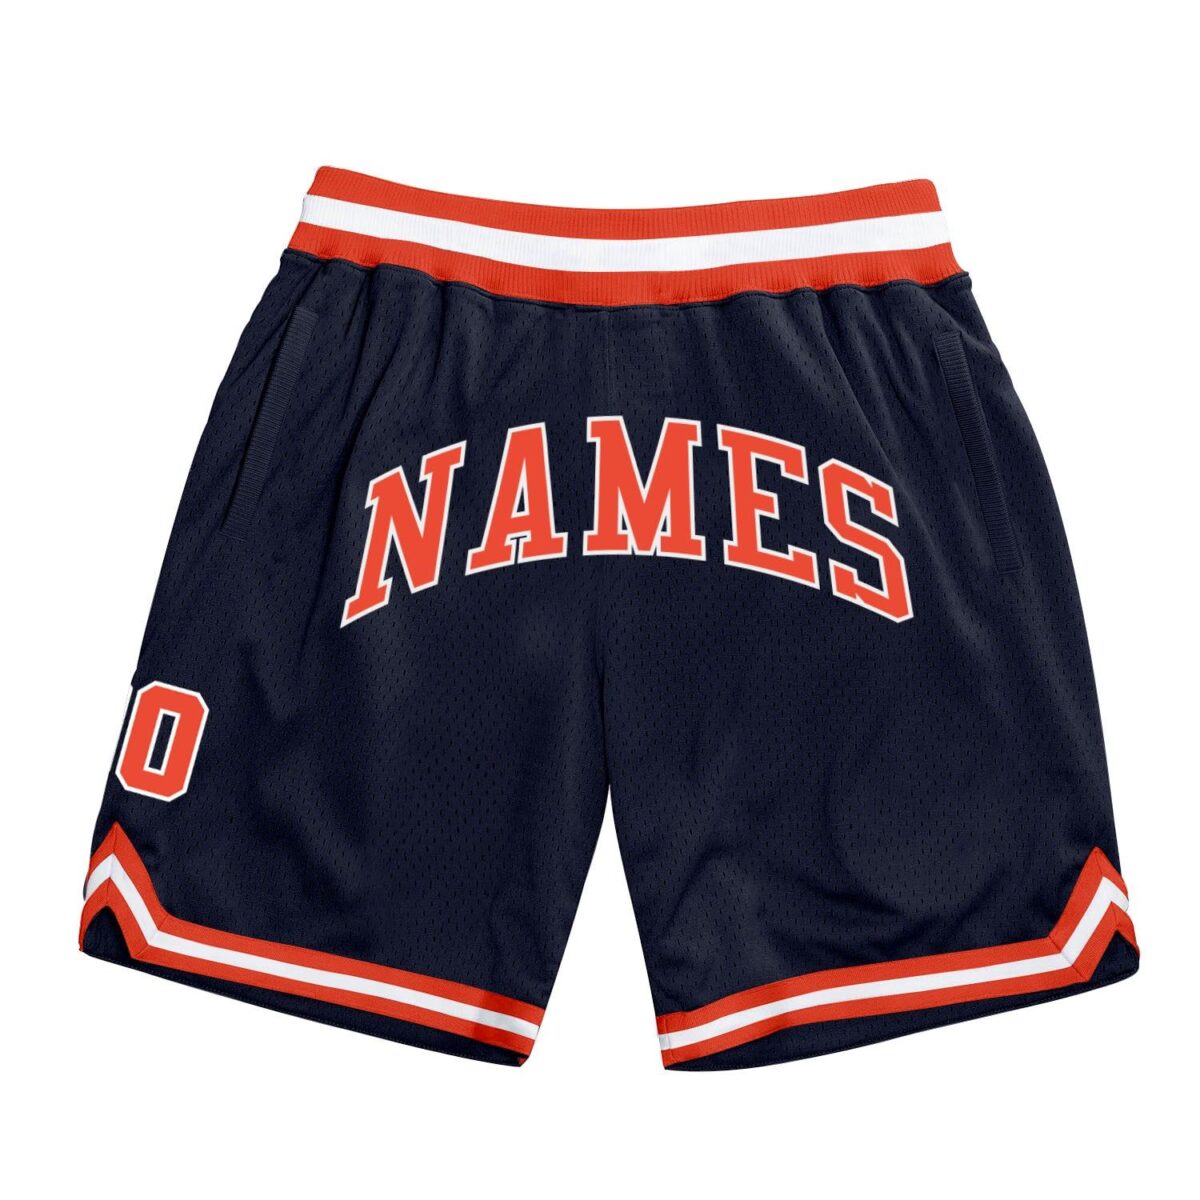 Navy Red & White Basketball Shorts 1